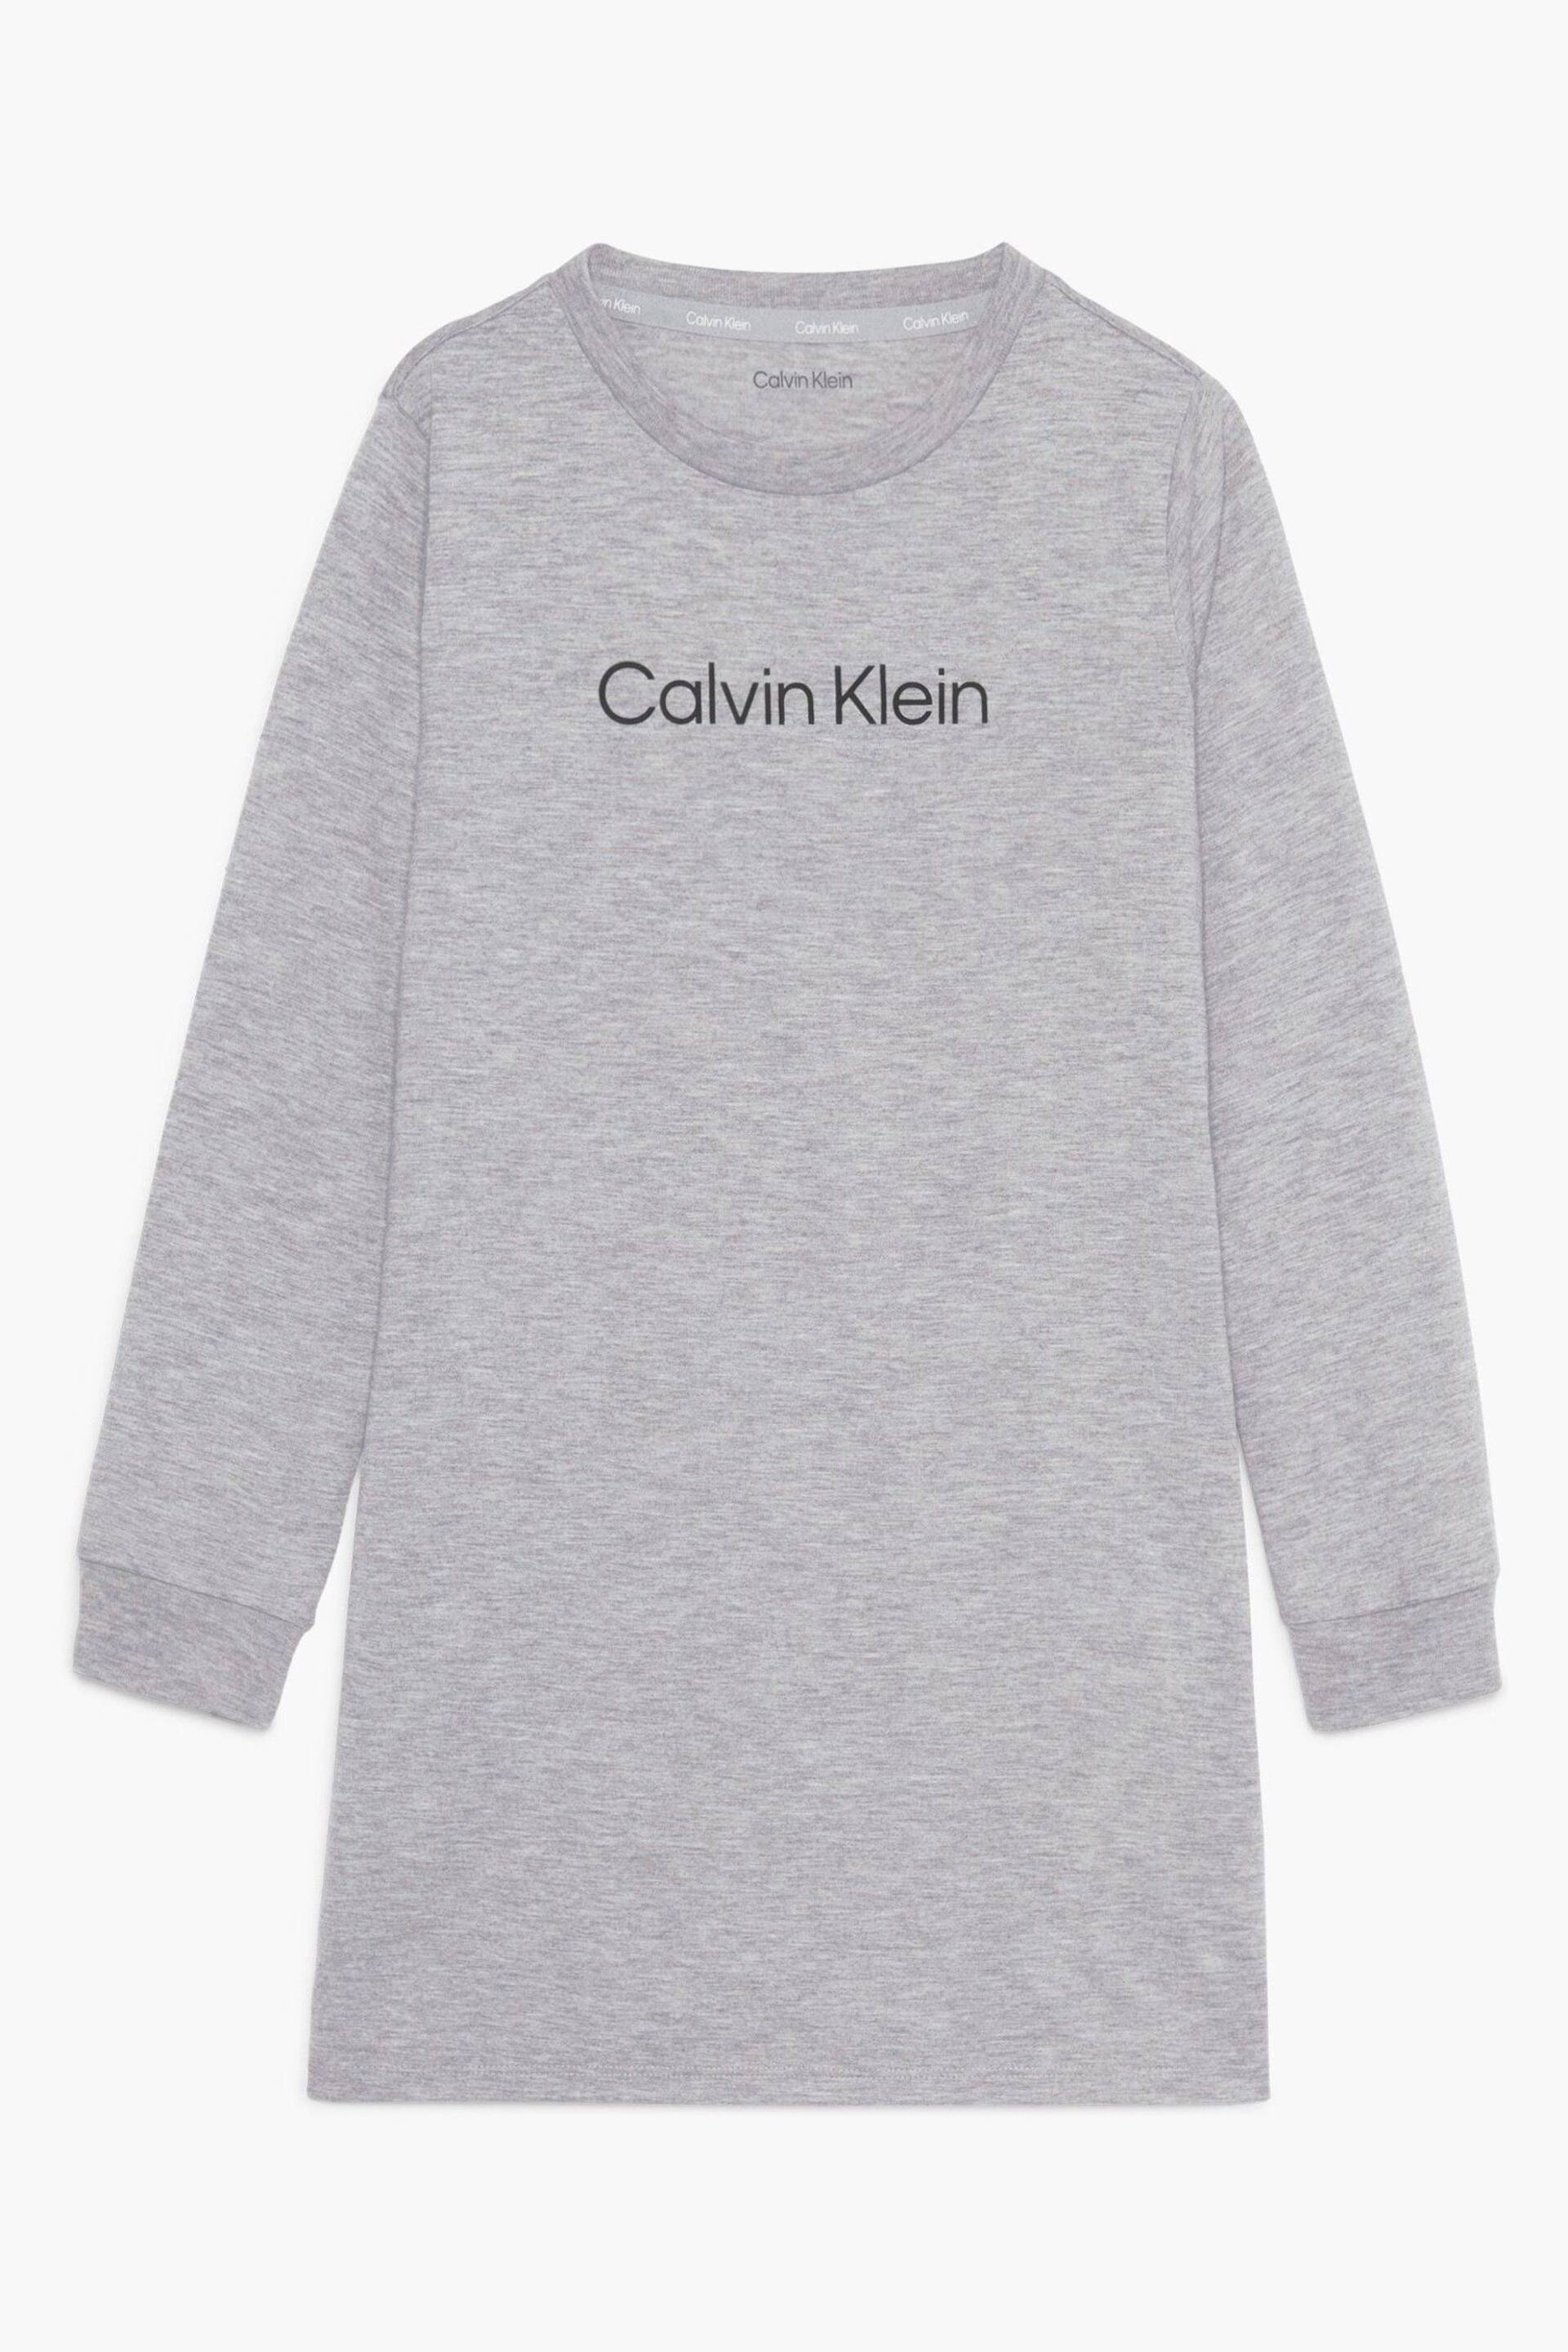 Calvin Klein Grey Modern Cotton Long Sleeve Sleep Dress - Image 3 of 3